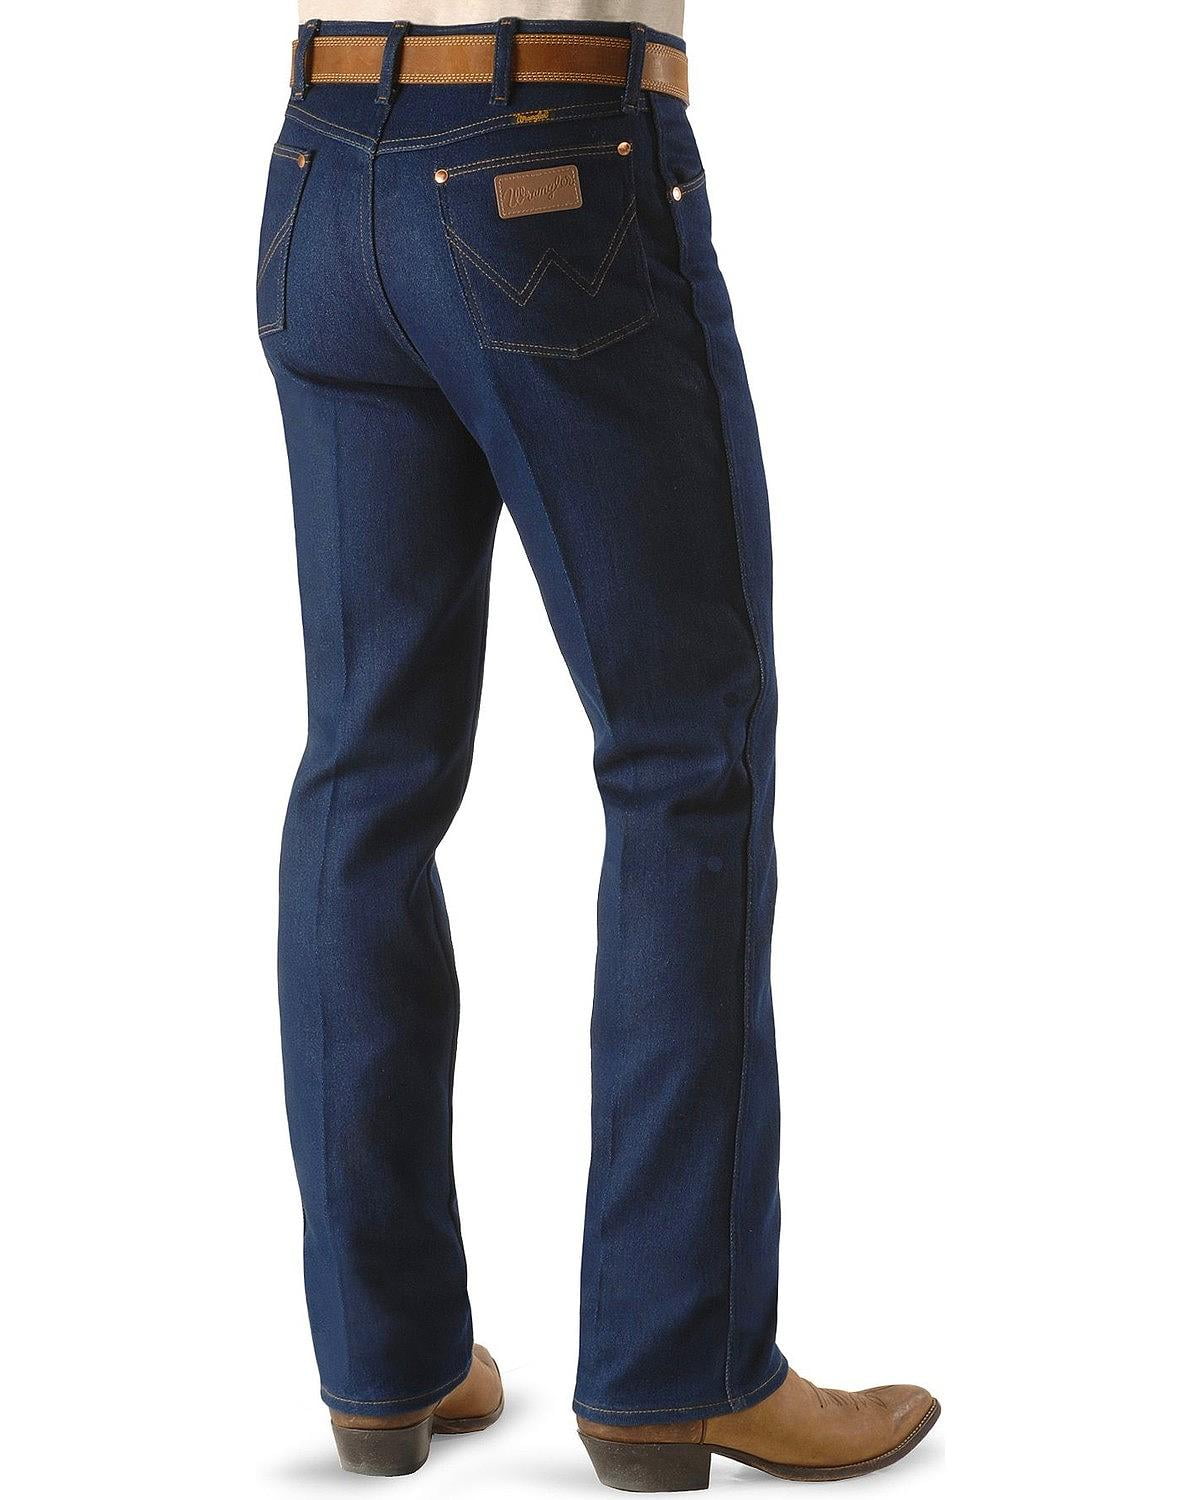 wrangler men's stretch jeans walmart